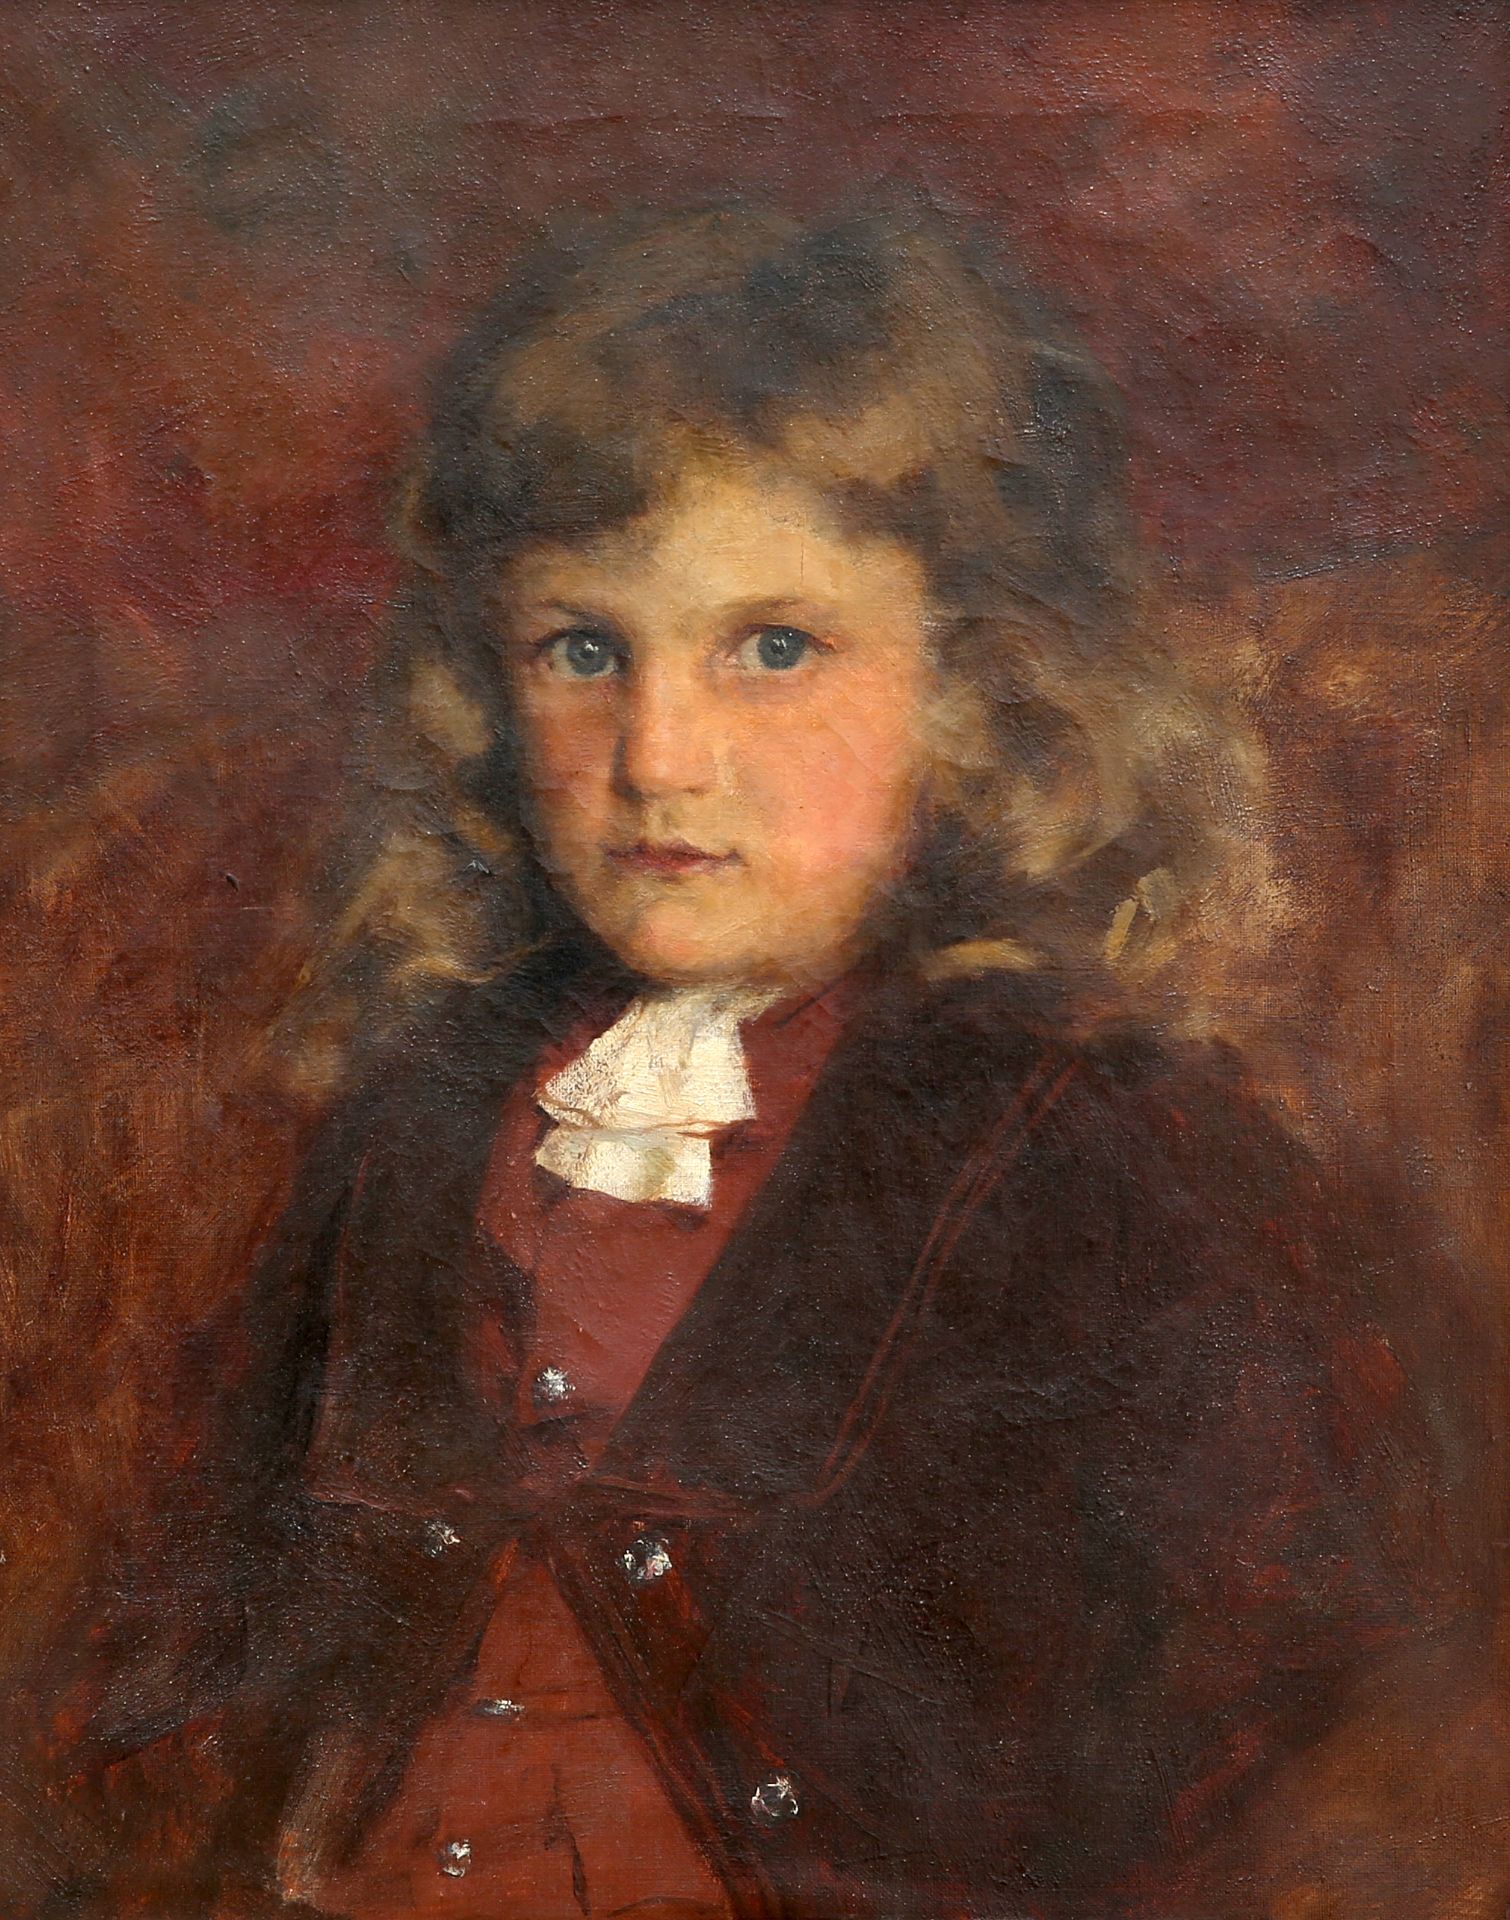 BRITISH SCHOOL (EARLY 20TH CENTURY), PORTRAIT OF A CHILD